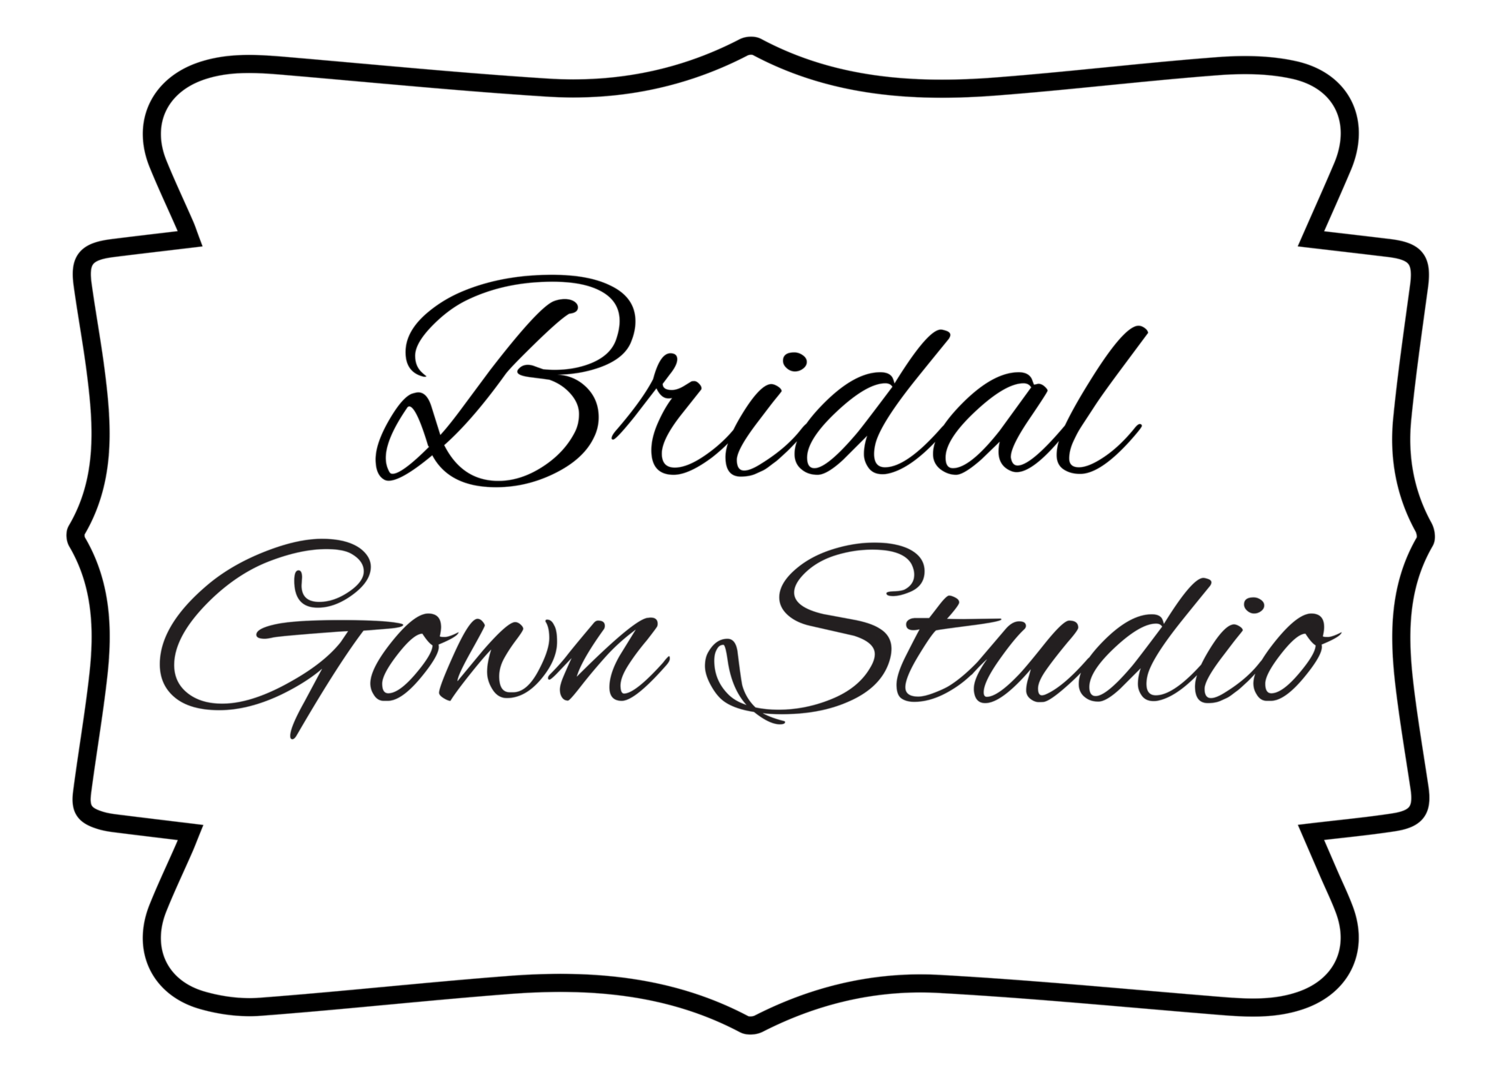 BRIDAL GOWN STUDIO